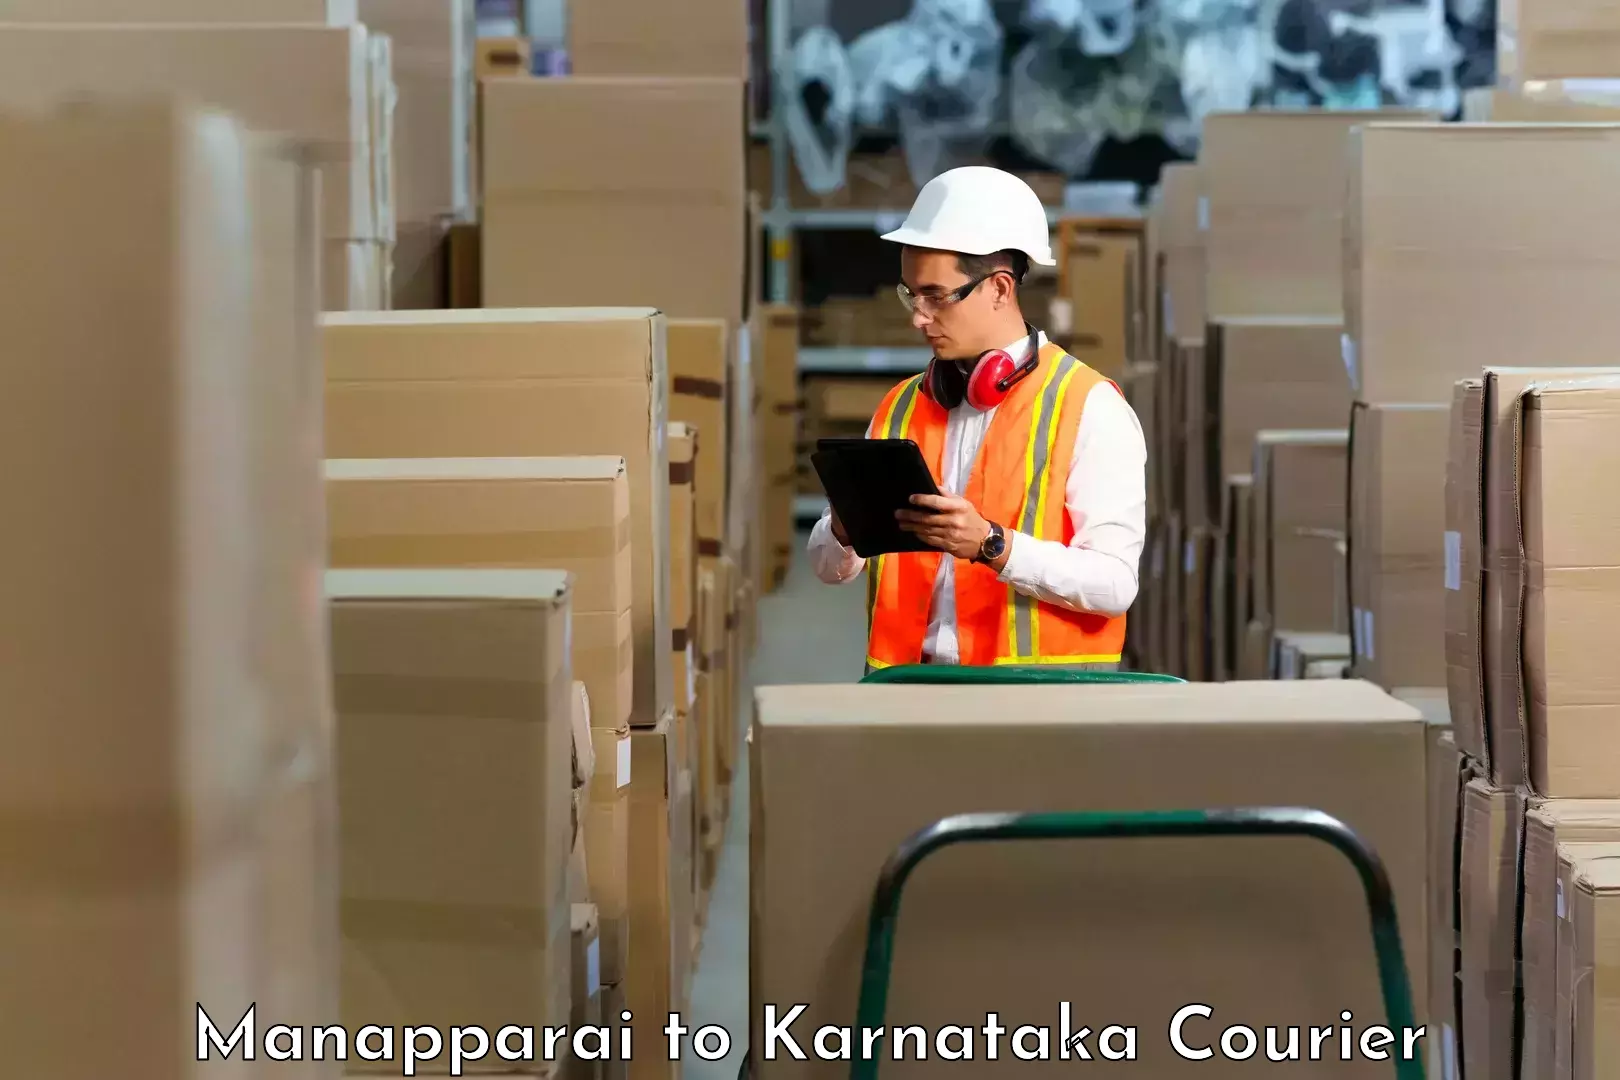 Reliable delivery network Manapparai to Kodagu